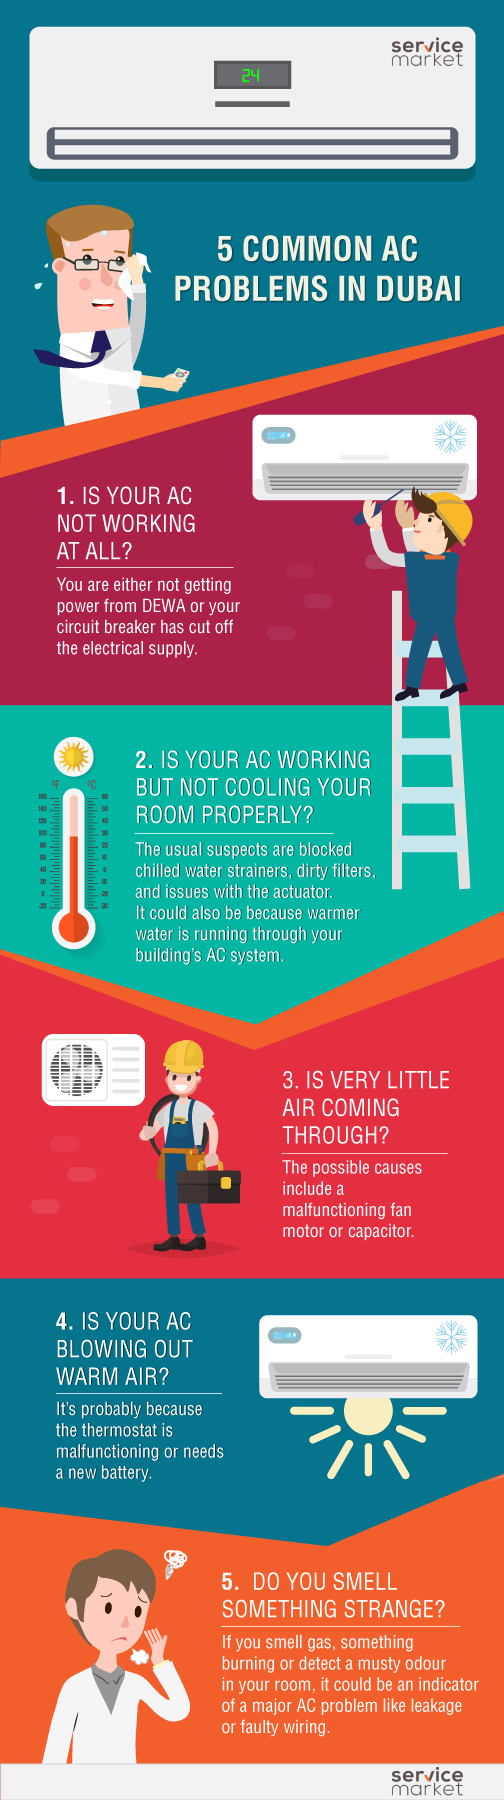 Common AC problems in Dubai - Infographic